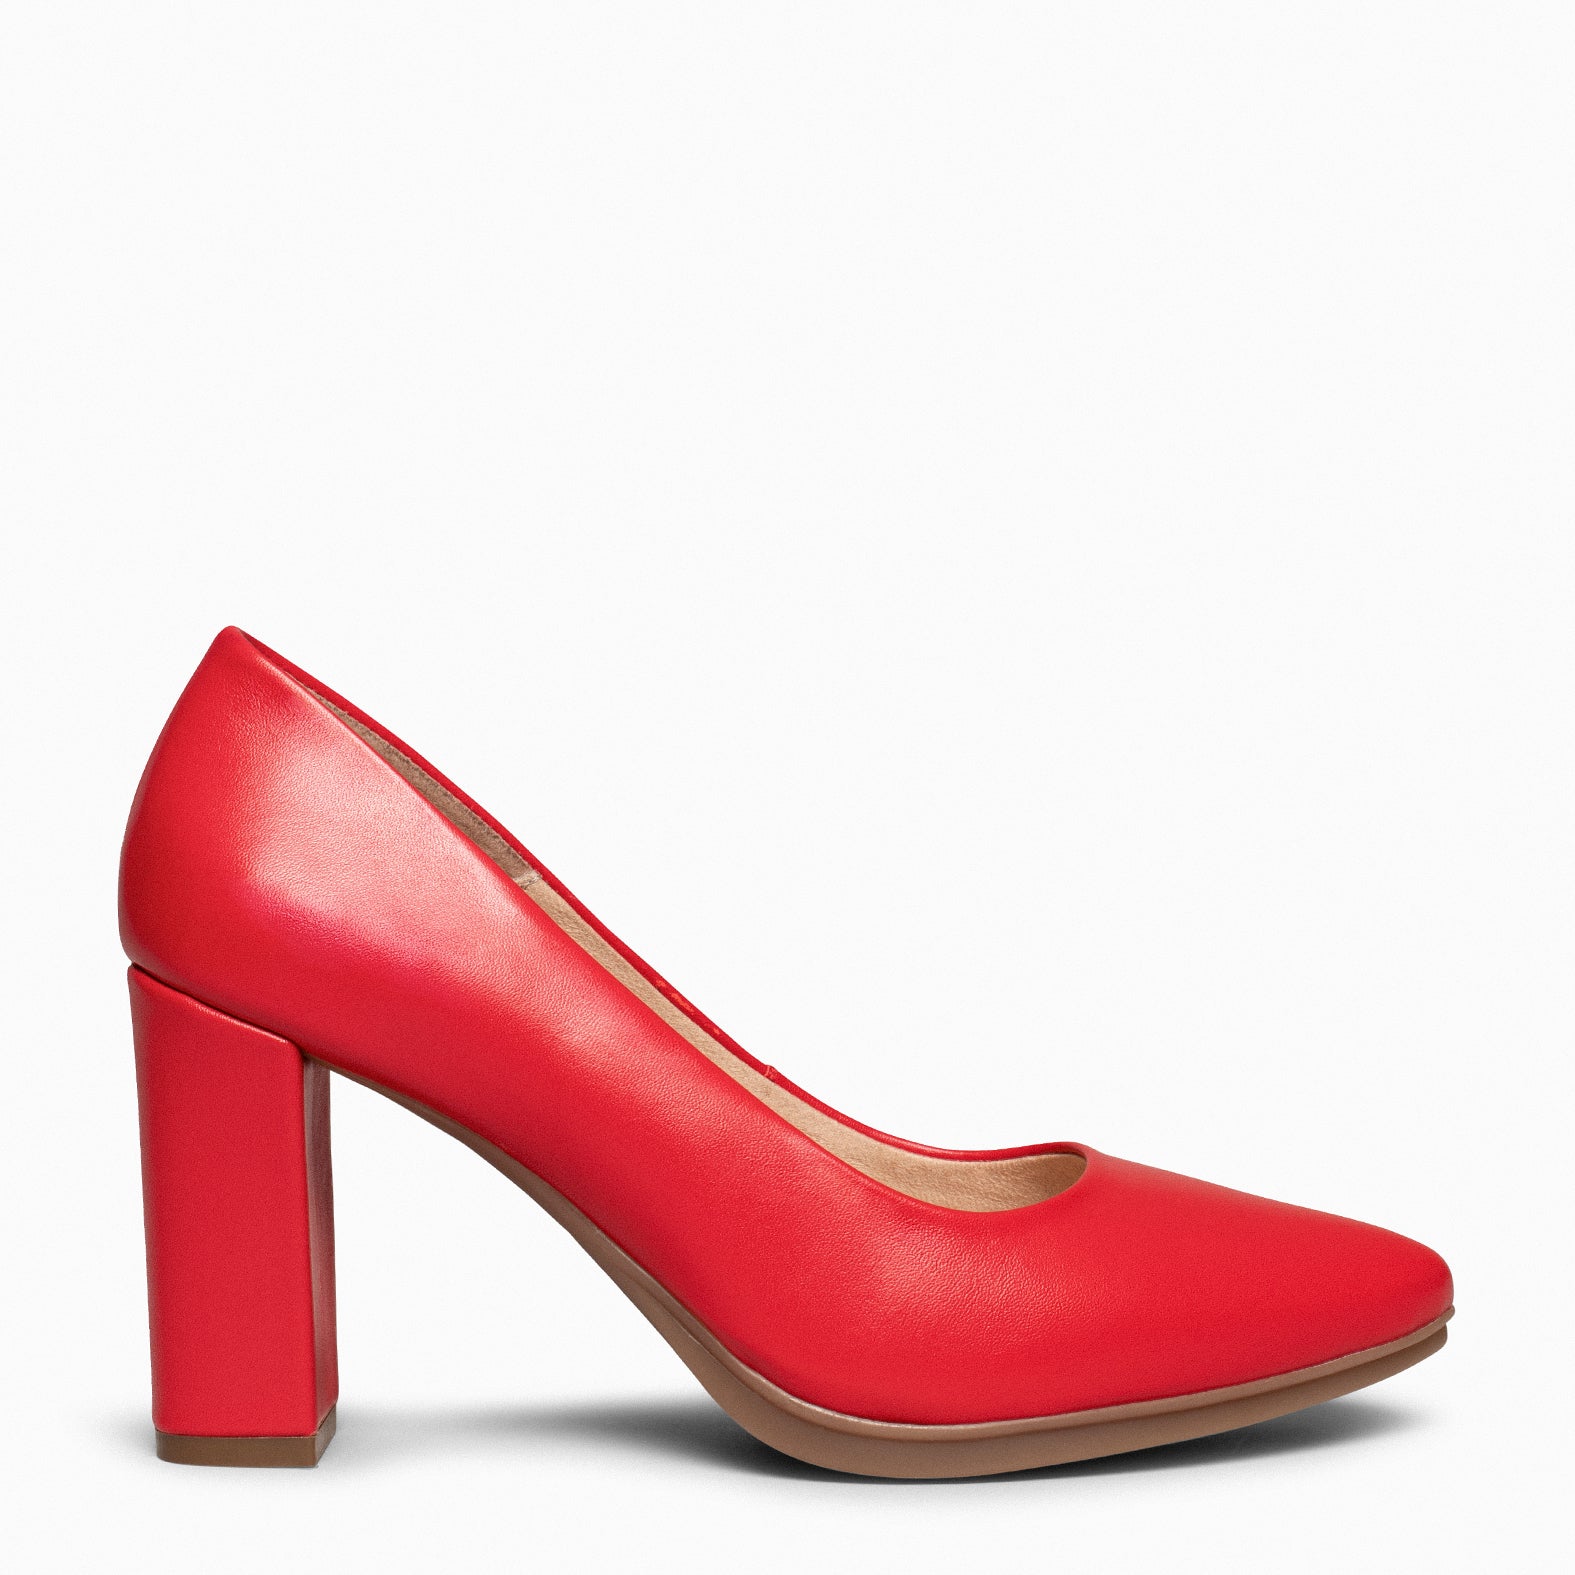 URBAN SALON –  RED nappa leather high heel